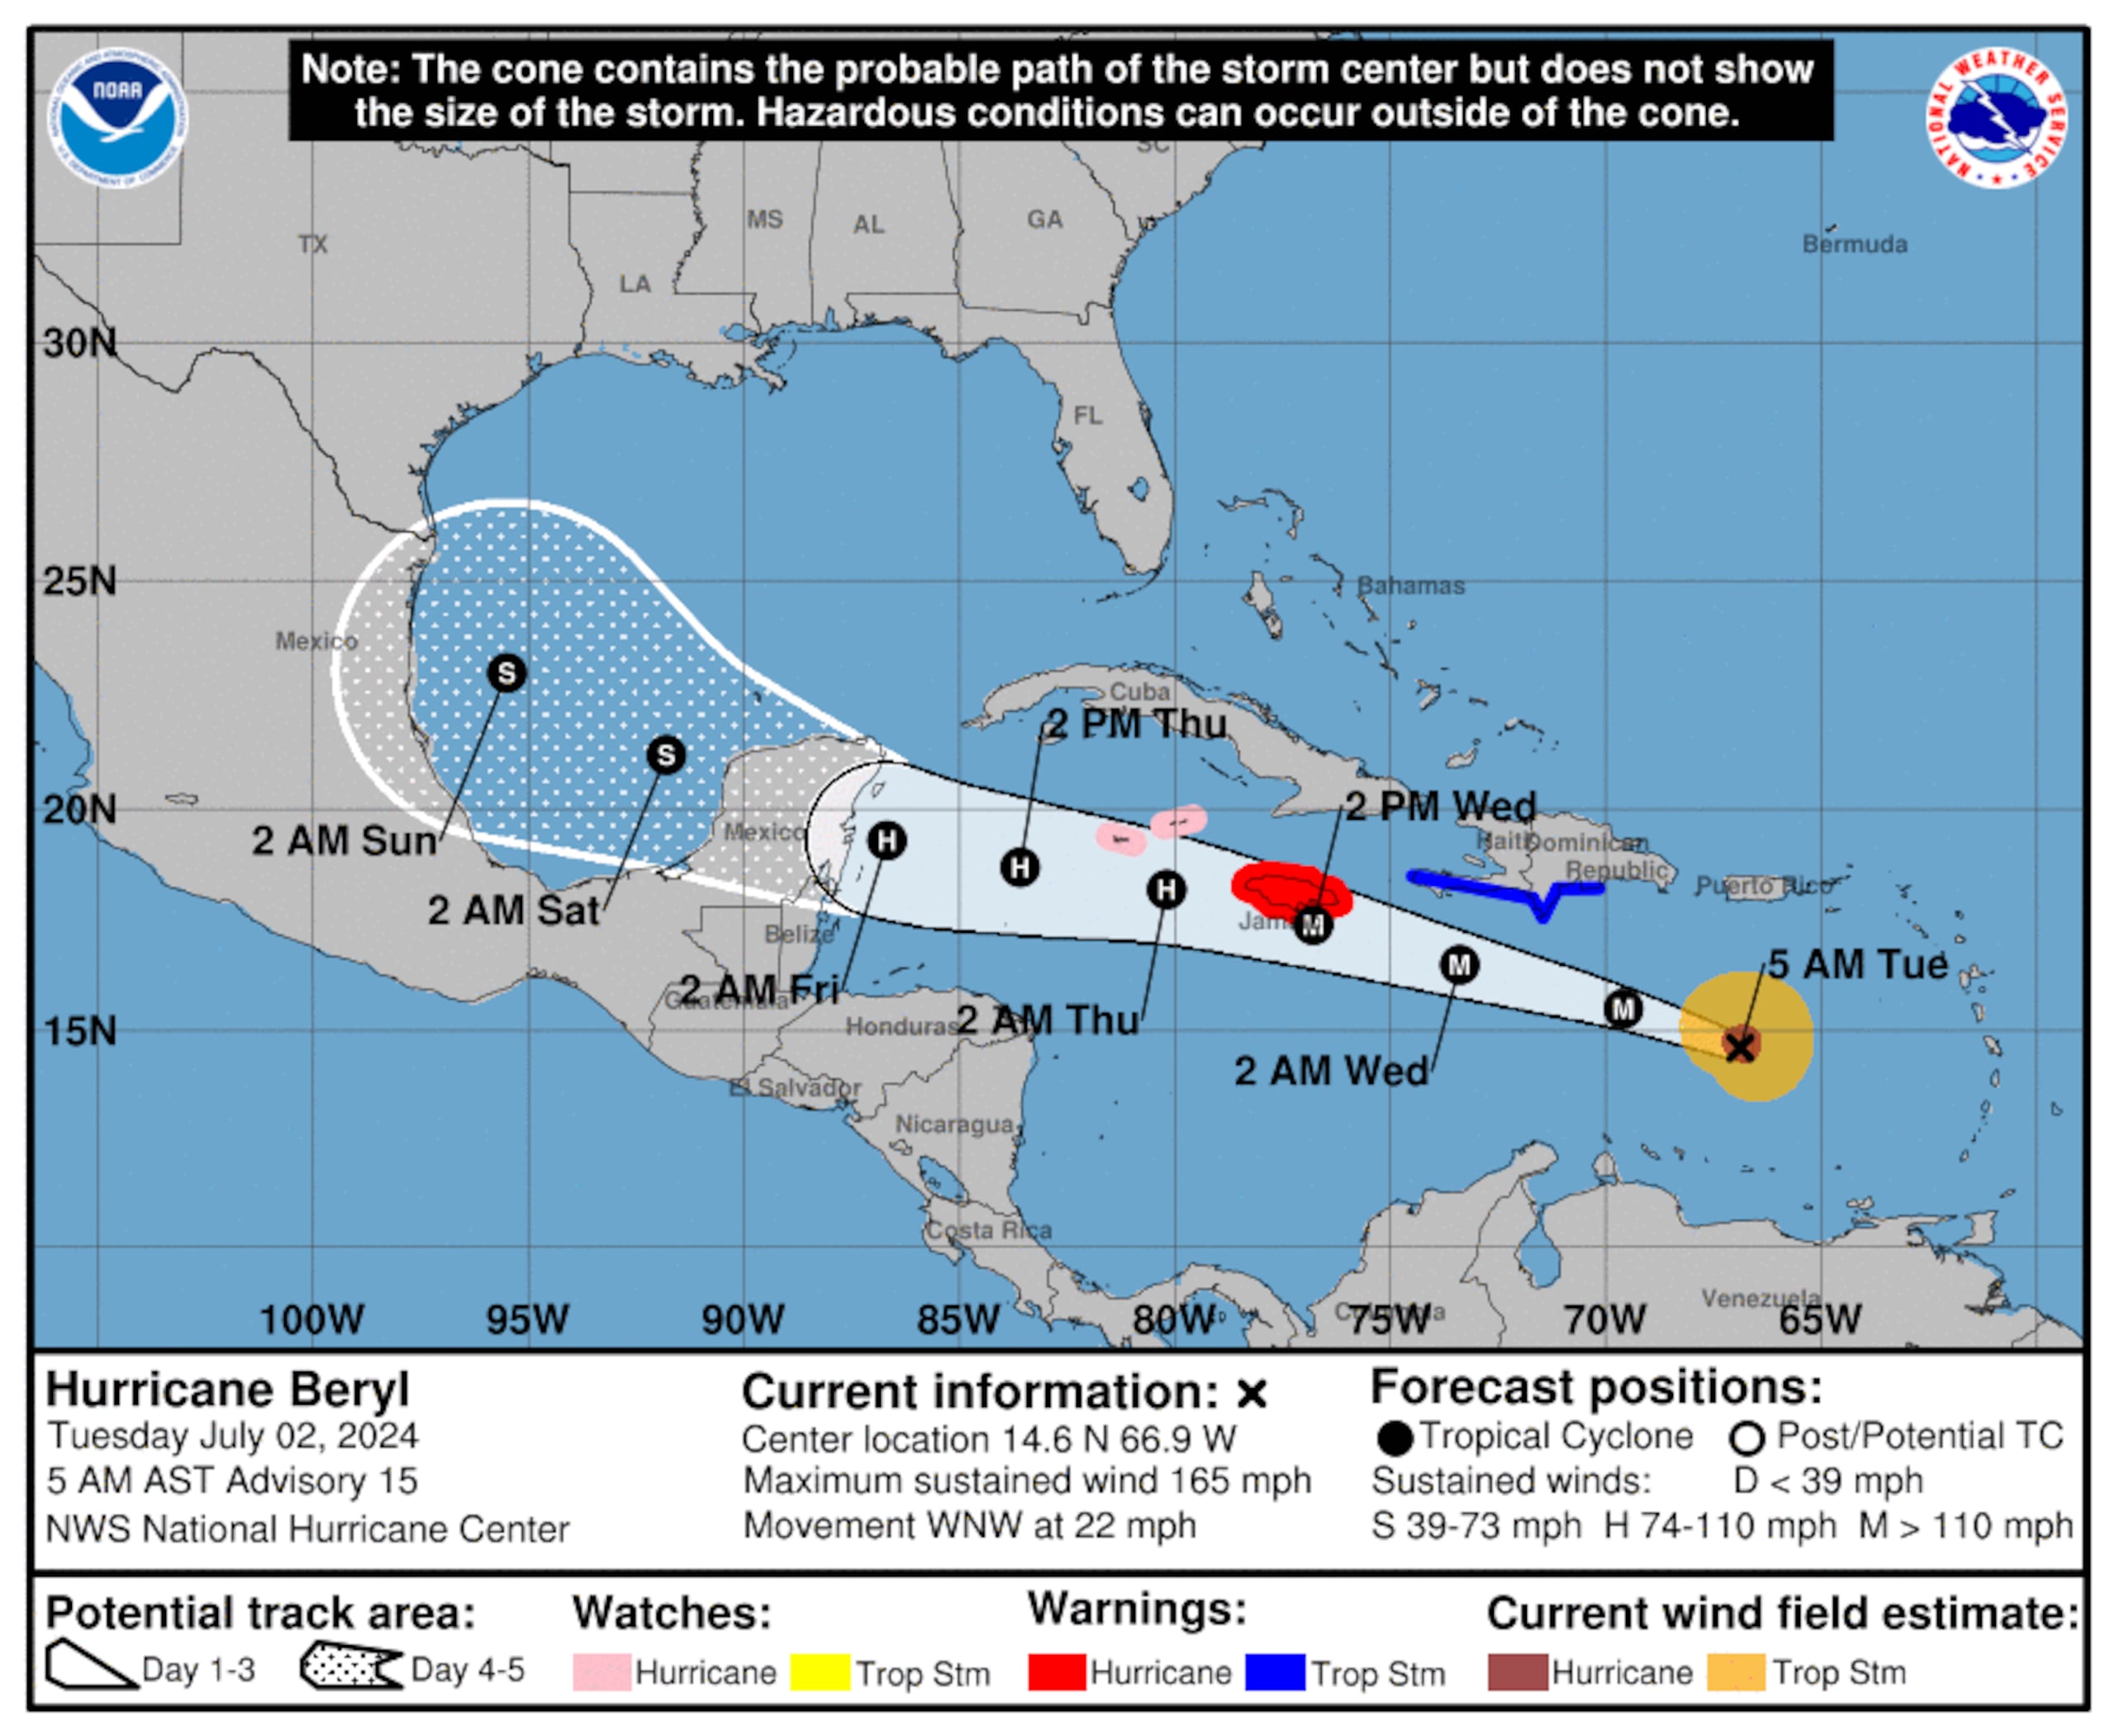 Pronóstico del huracán Beryl emitido a las 5:00 de la mañana del 2 de julio de 2024.